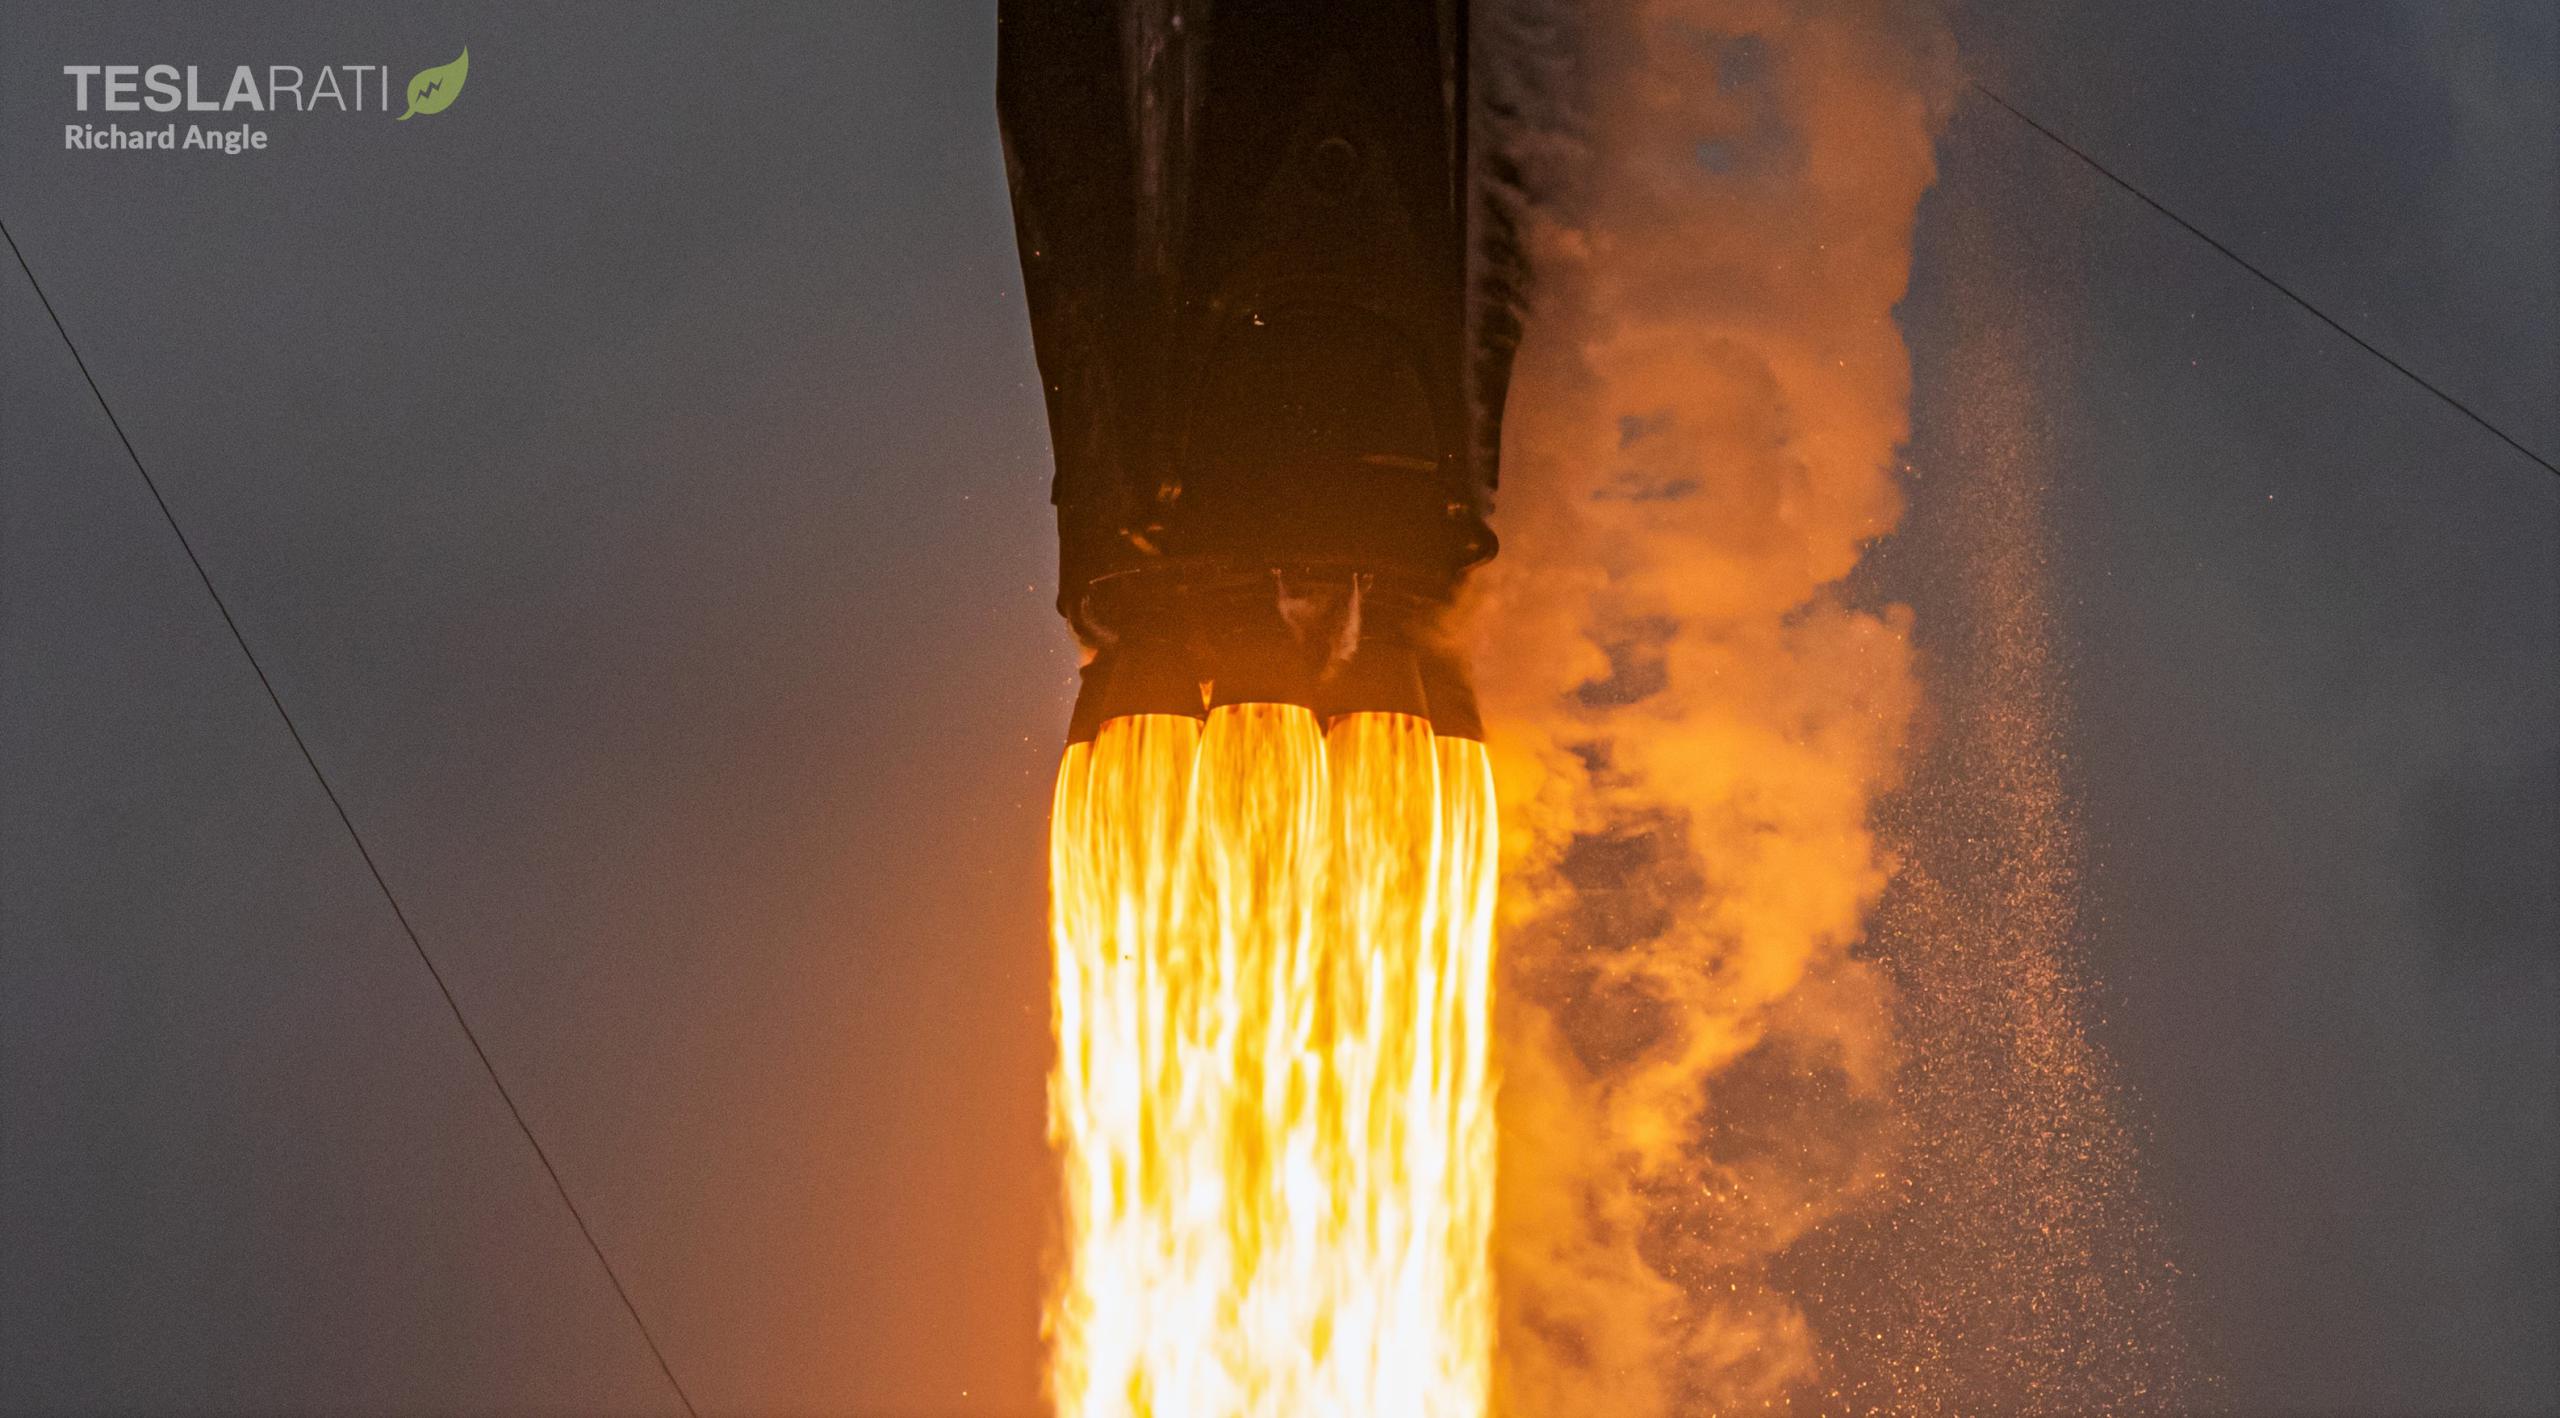 Transporter-2 Falcon 9 B1060 063021 (Richard Angle) launch 4 crop 1 (c)